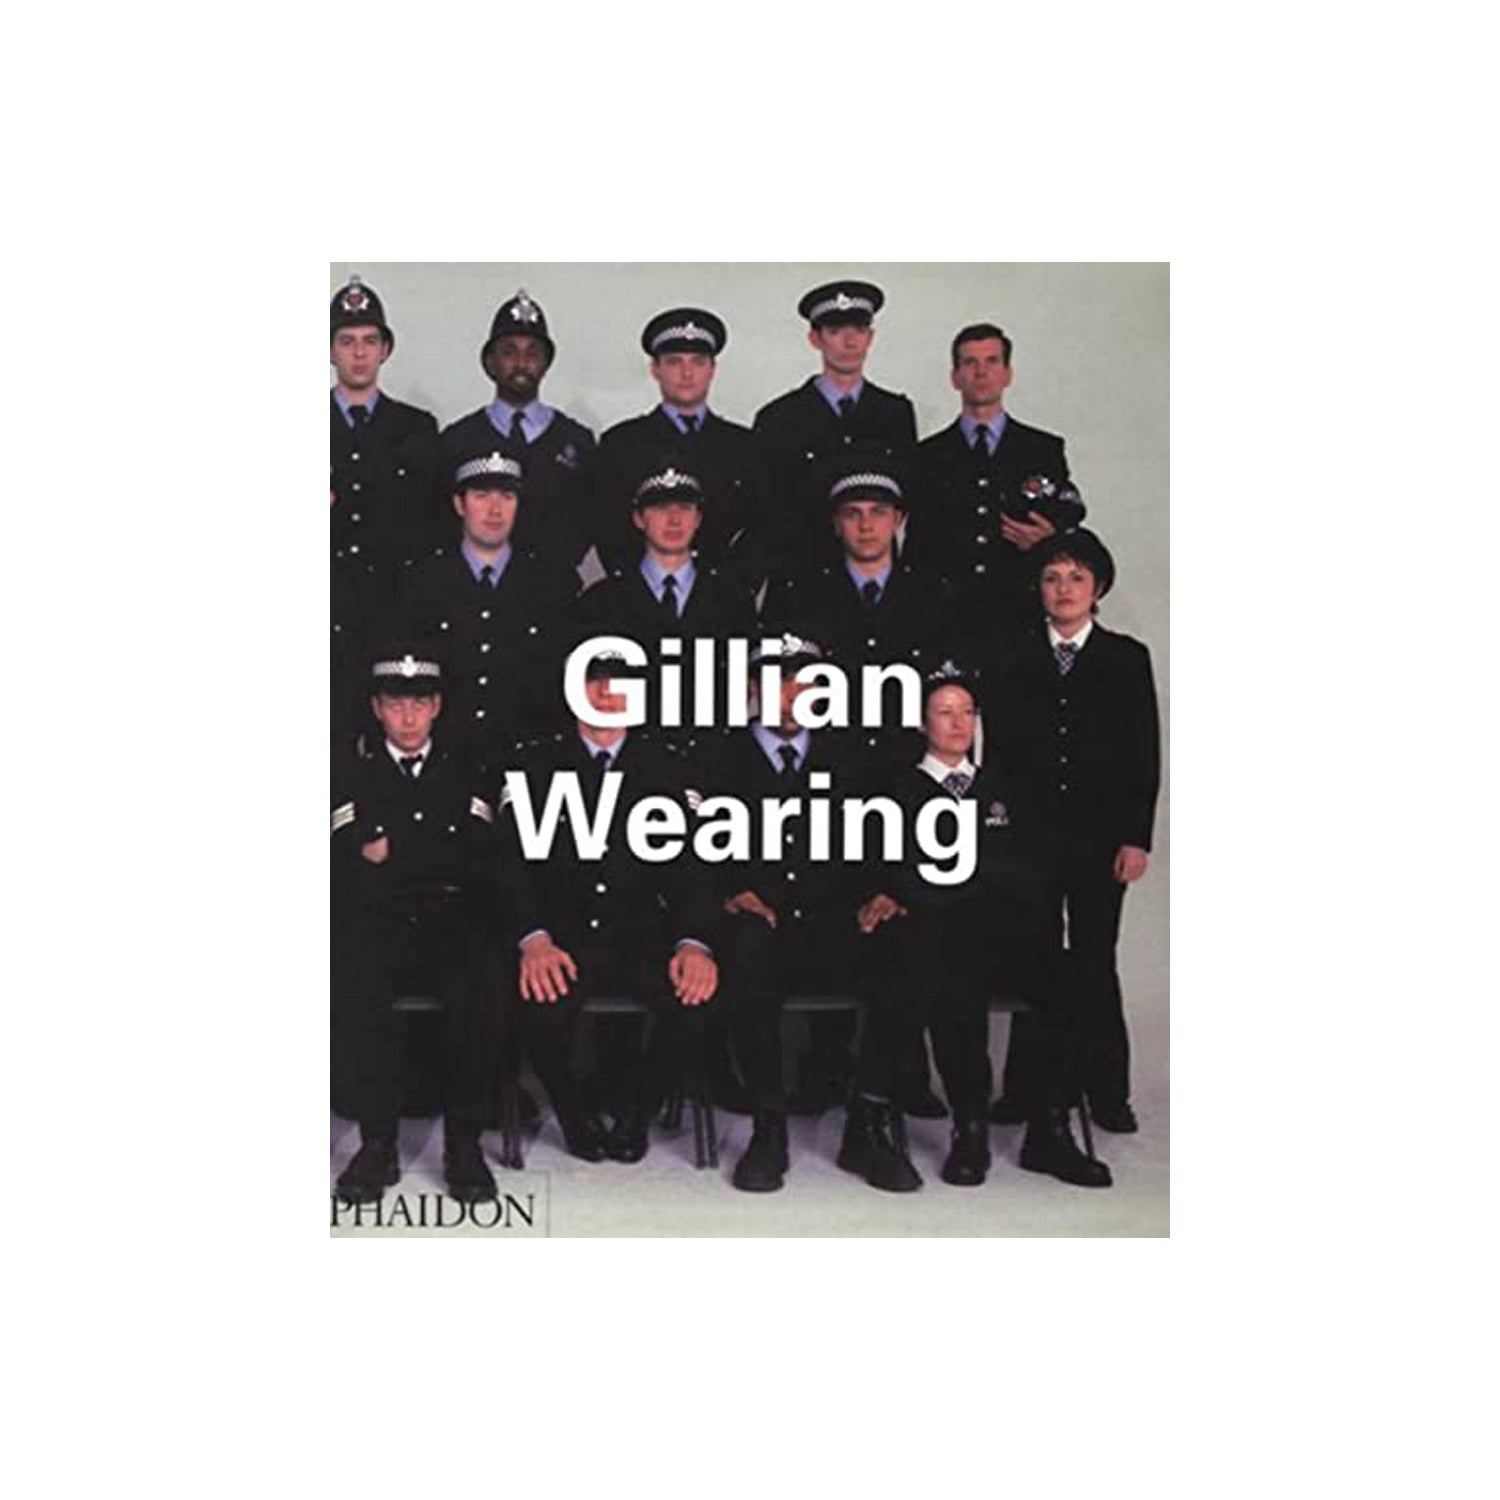 Gillian Wearing (Phaidon Contemporary Artist Series) Photo Museum Ireland